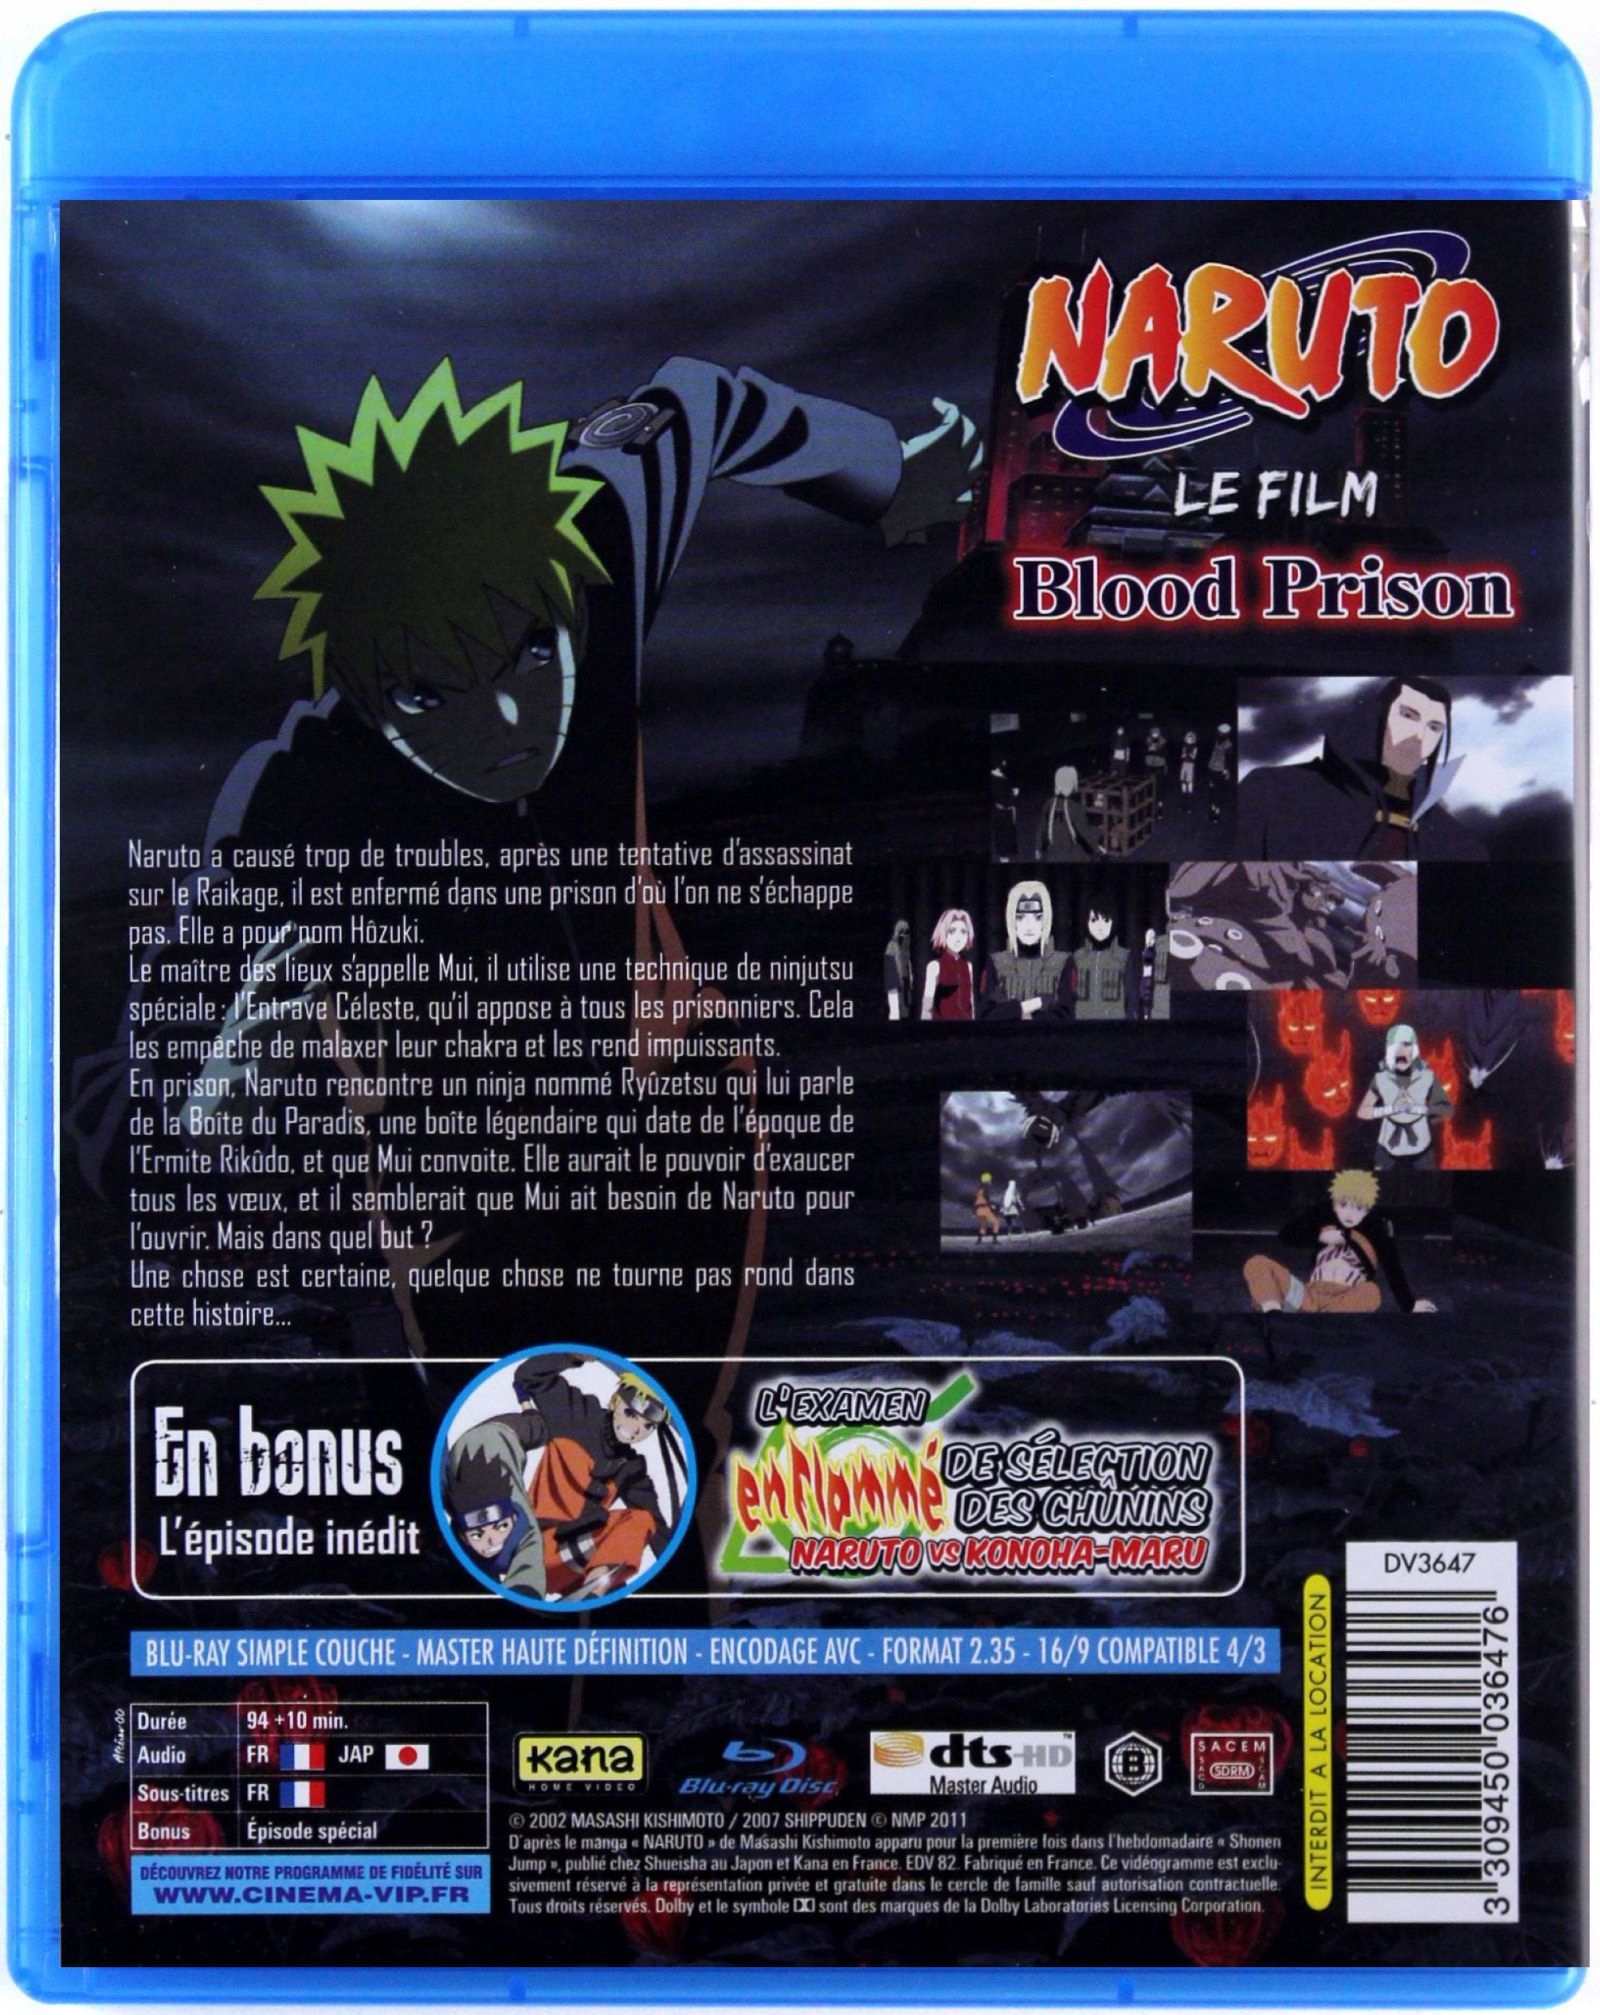  Boruto: Naruto - The Movie - Mediabook (+ DVD) [Blu